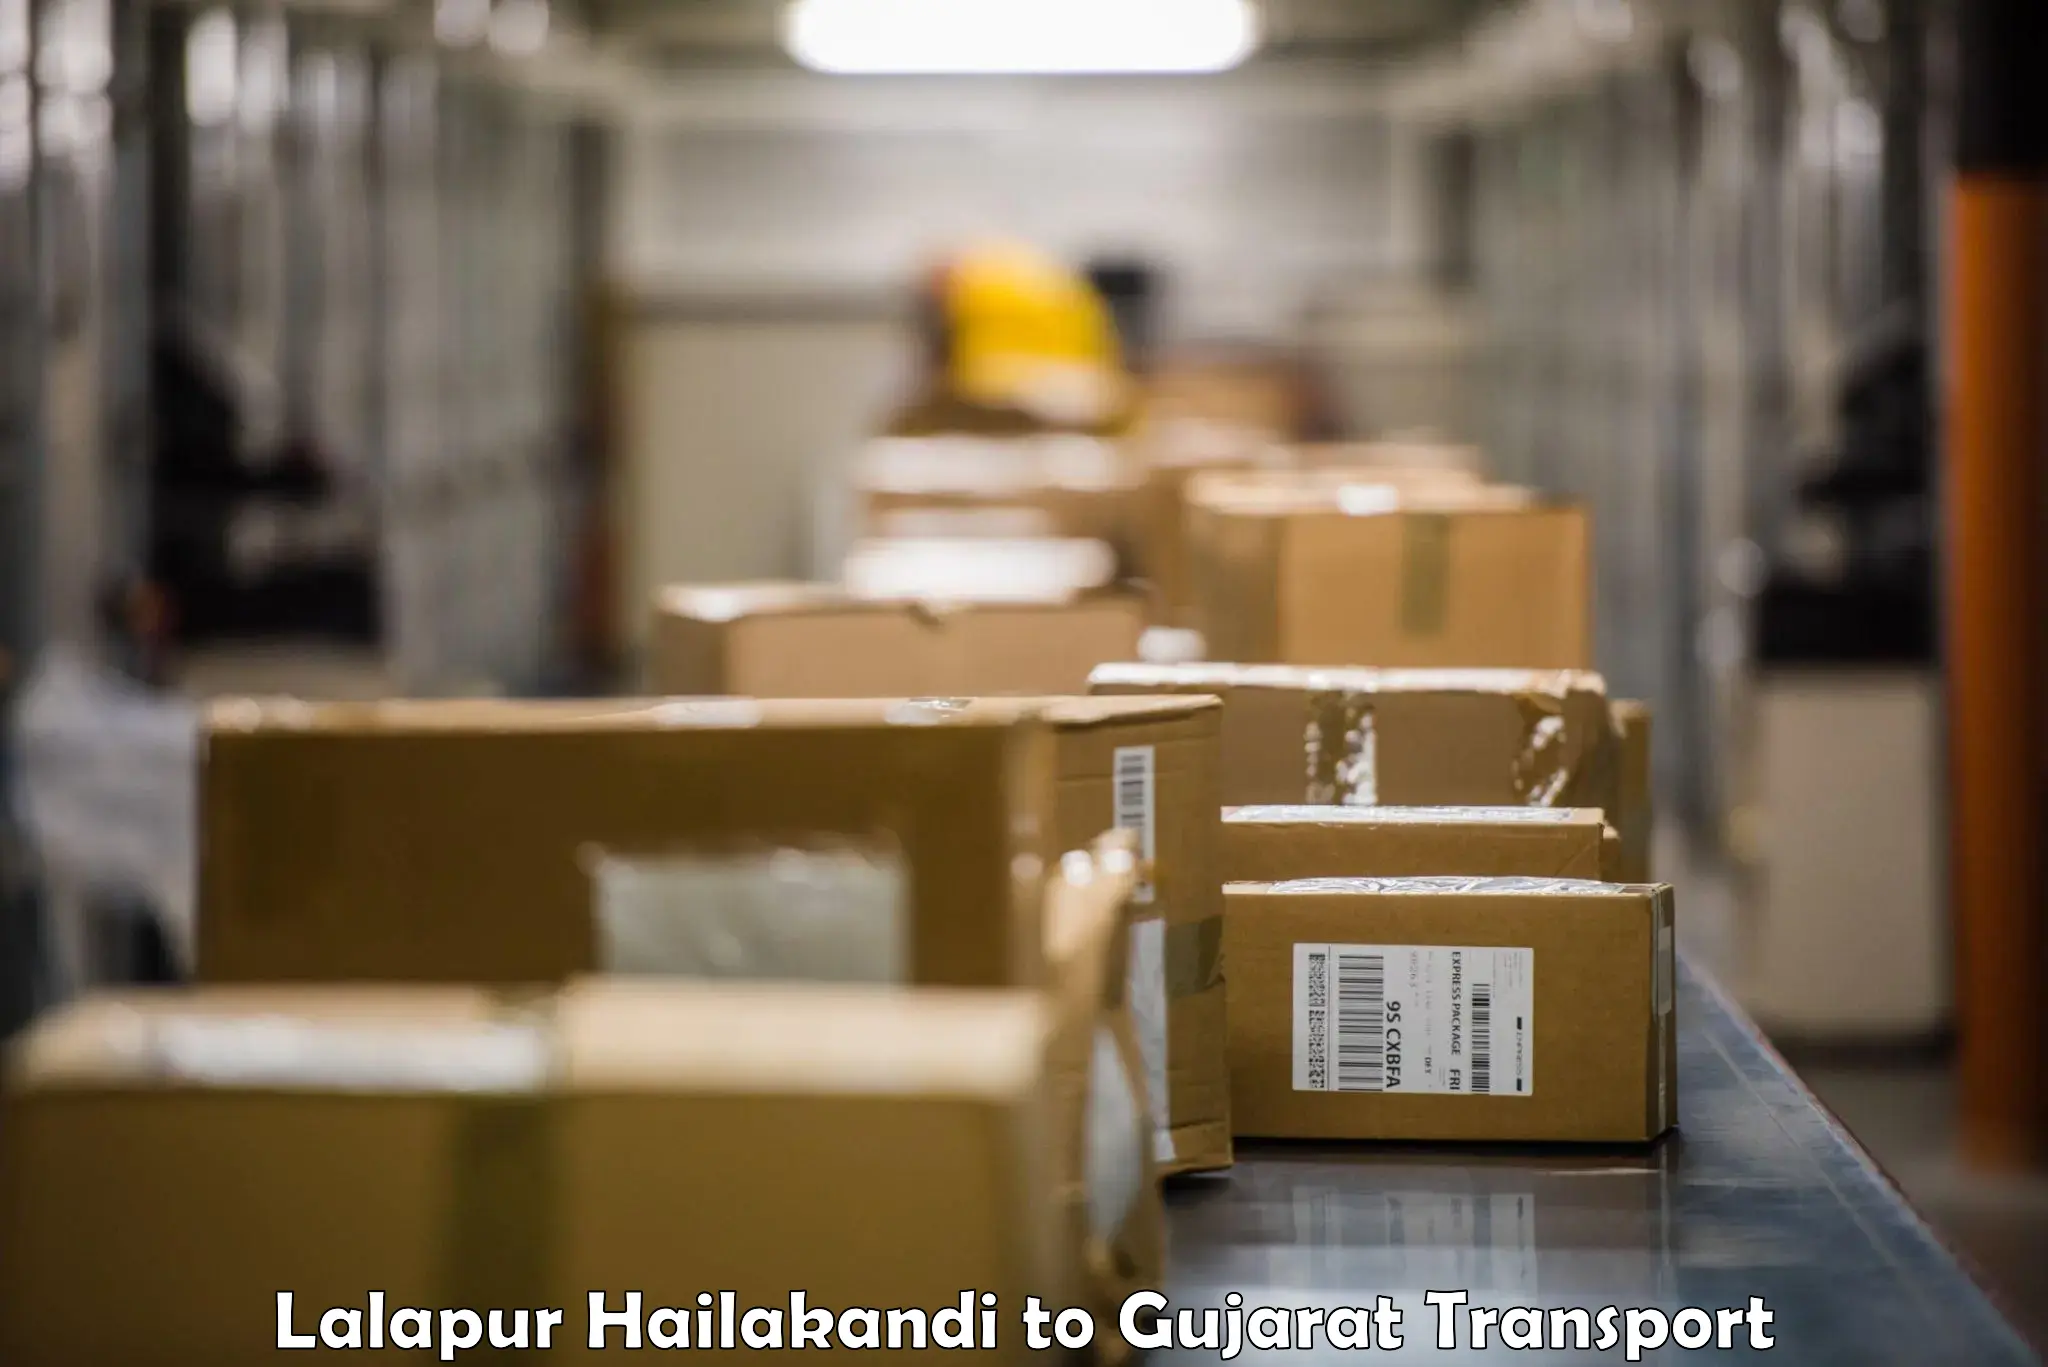 Truck transport companies in India Lalapur Hailakandi to Porbandar